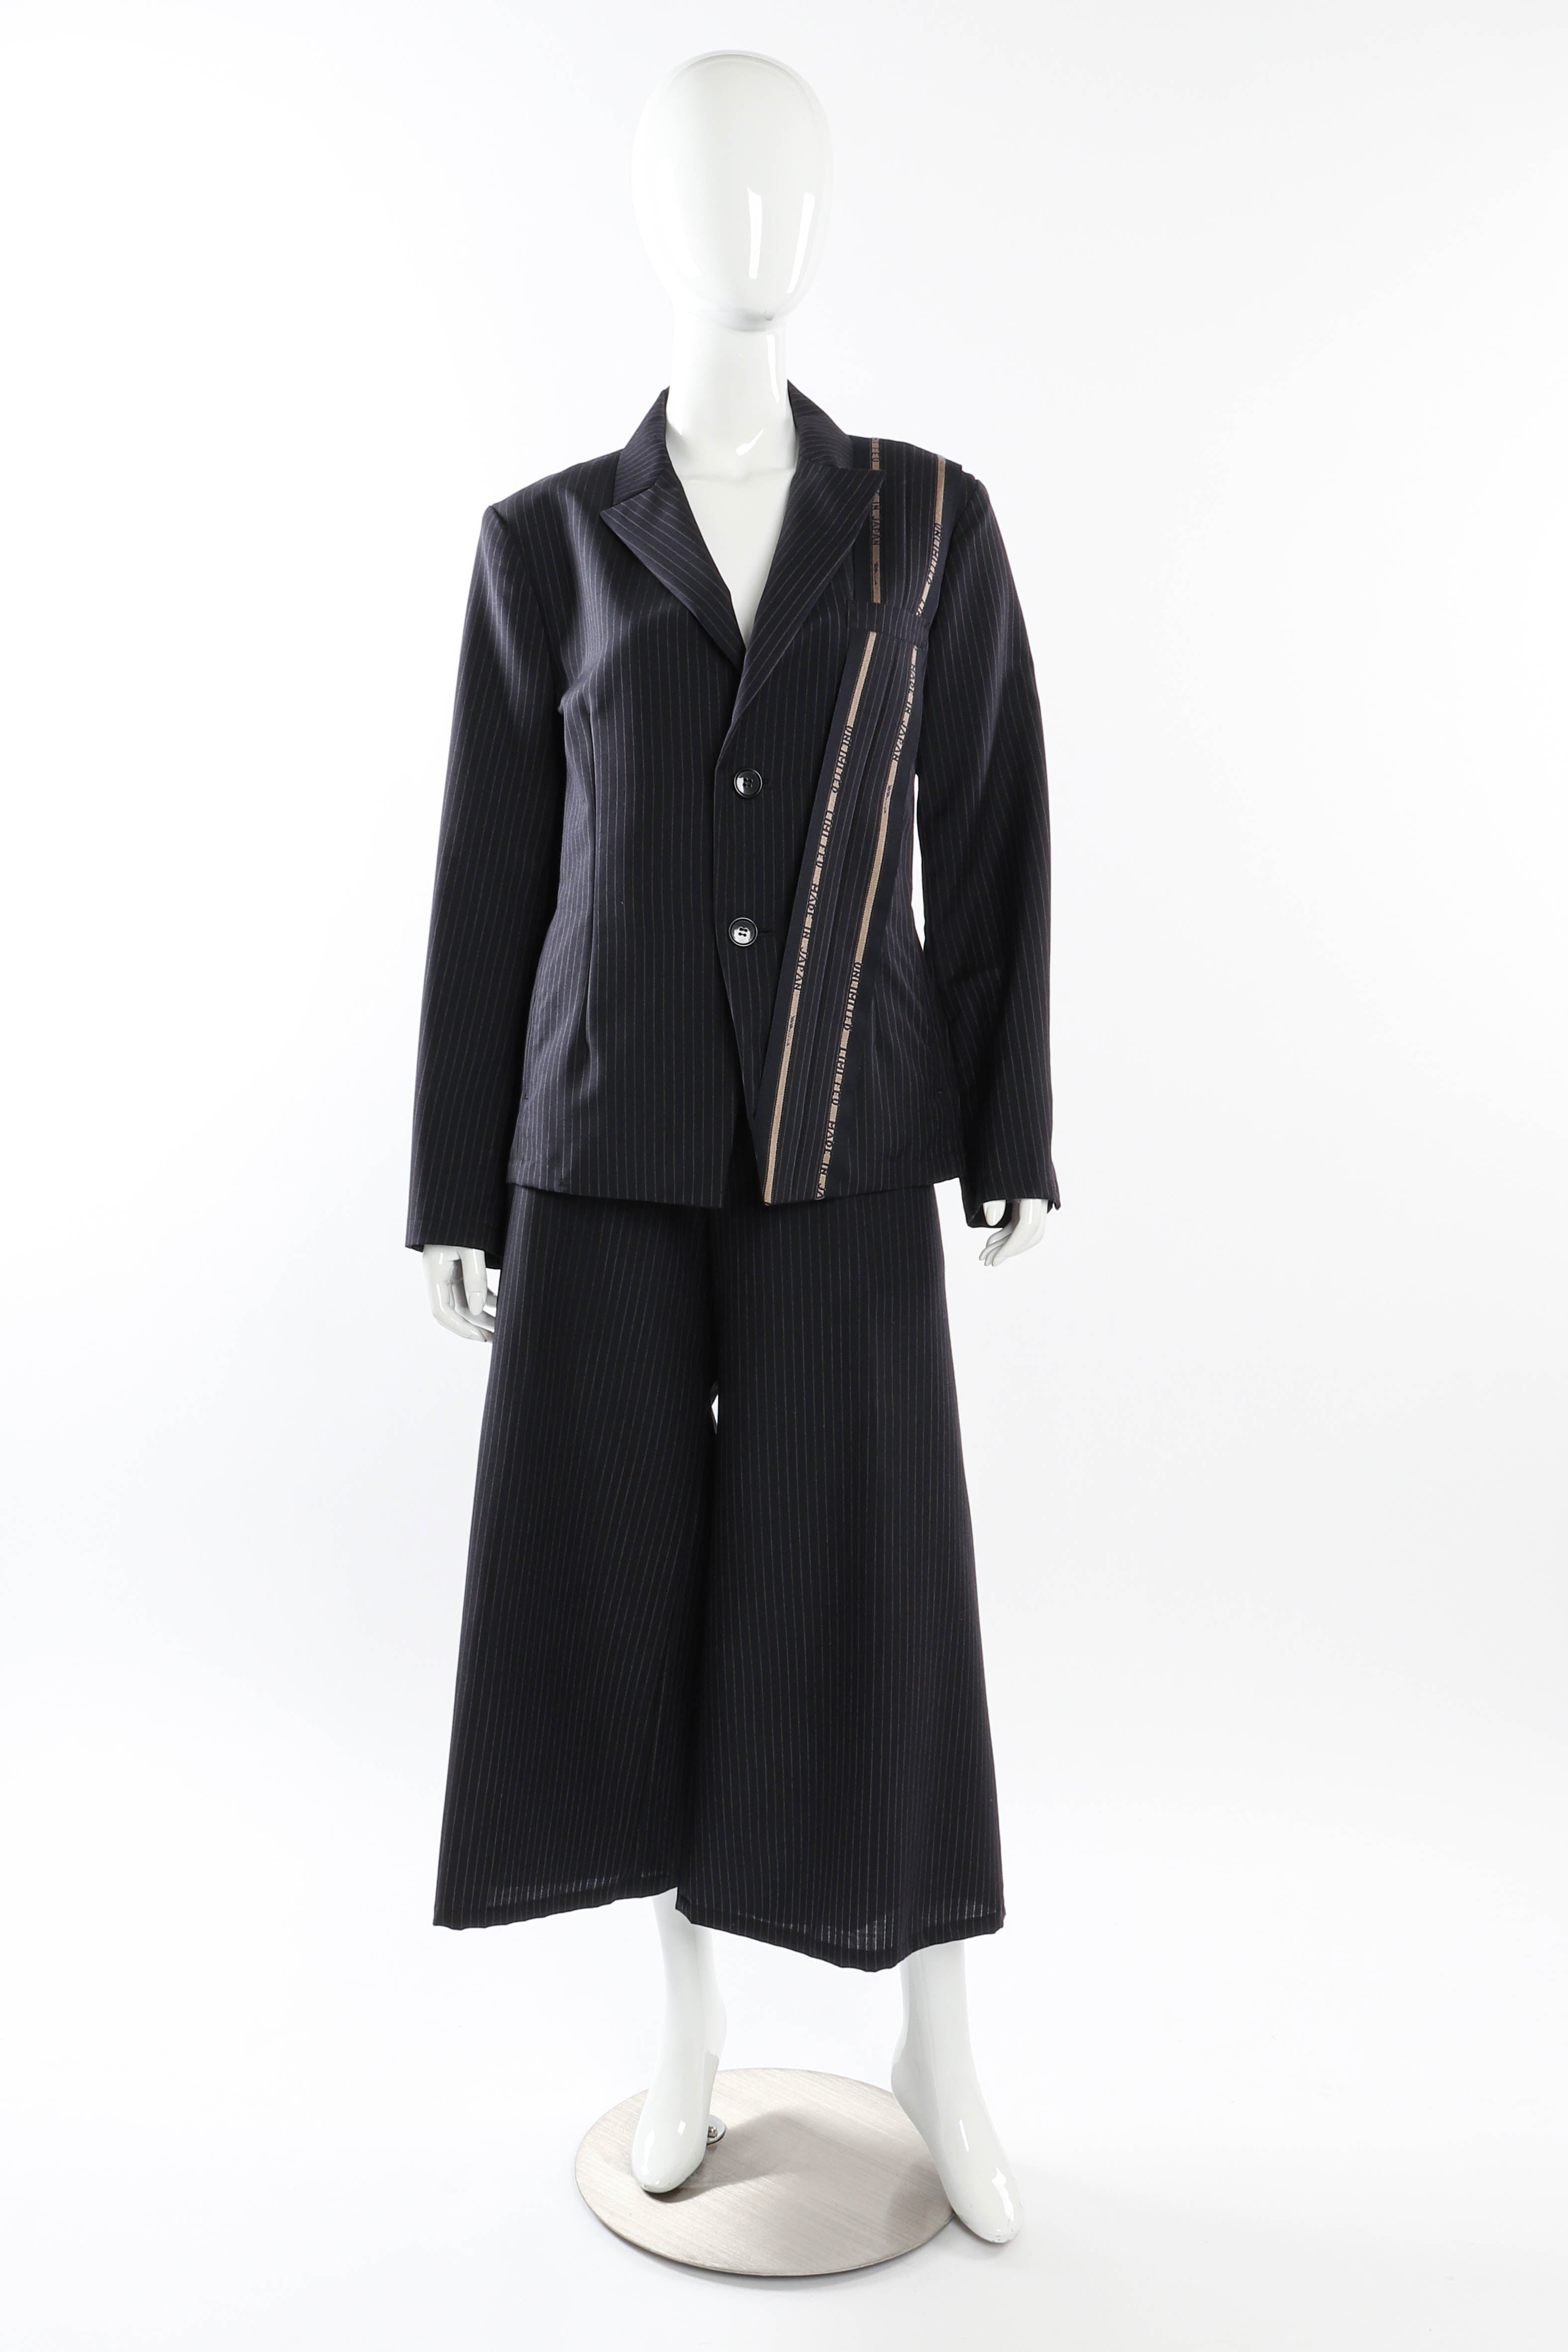 Limi Feu Pinstripe Wool Suit front on mannequin @recessla